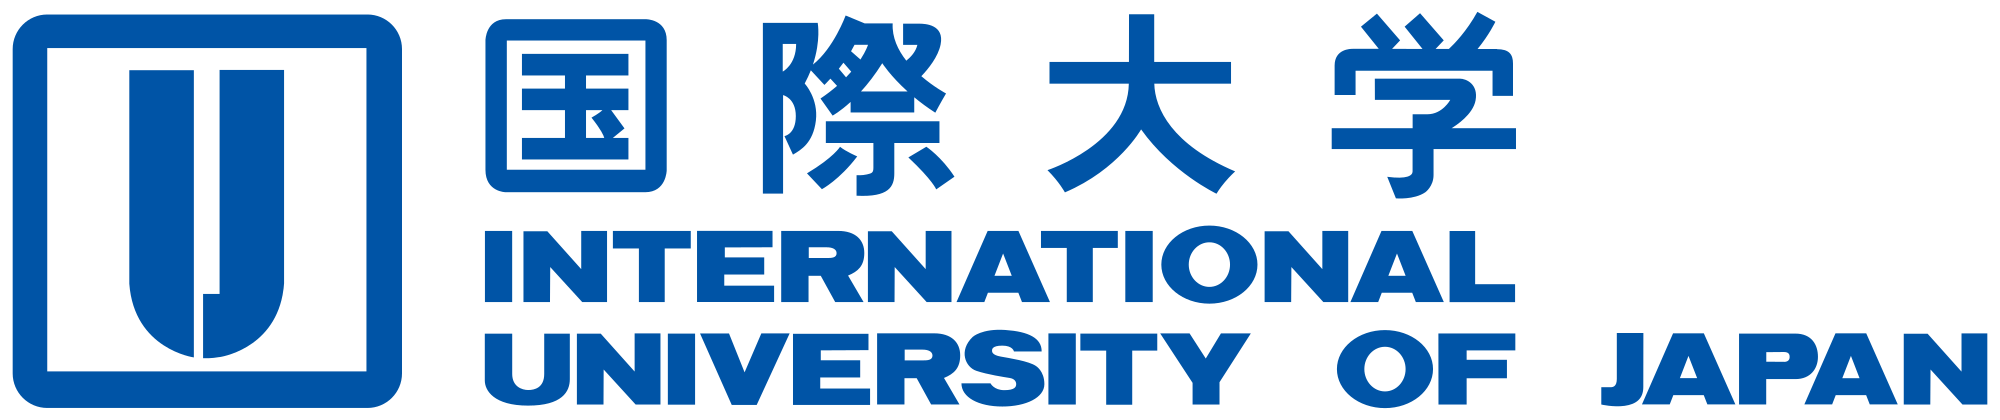 /assets/contentimages/International_University_of_Japan.png